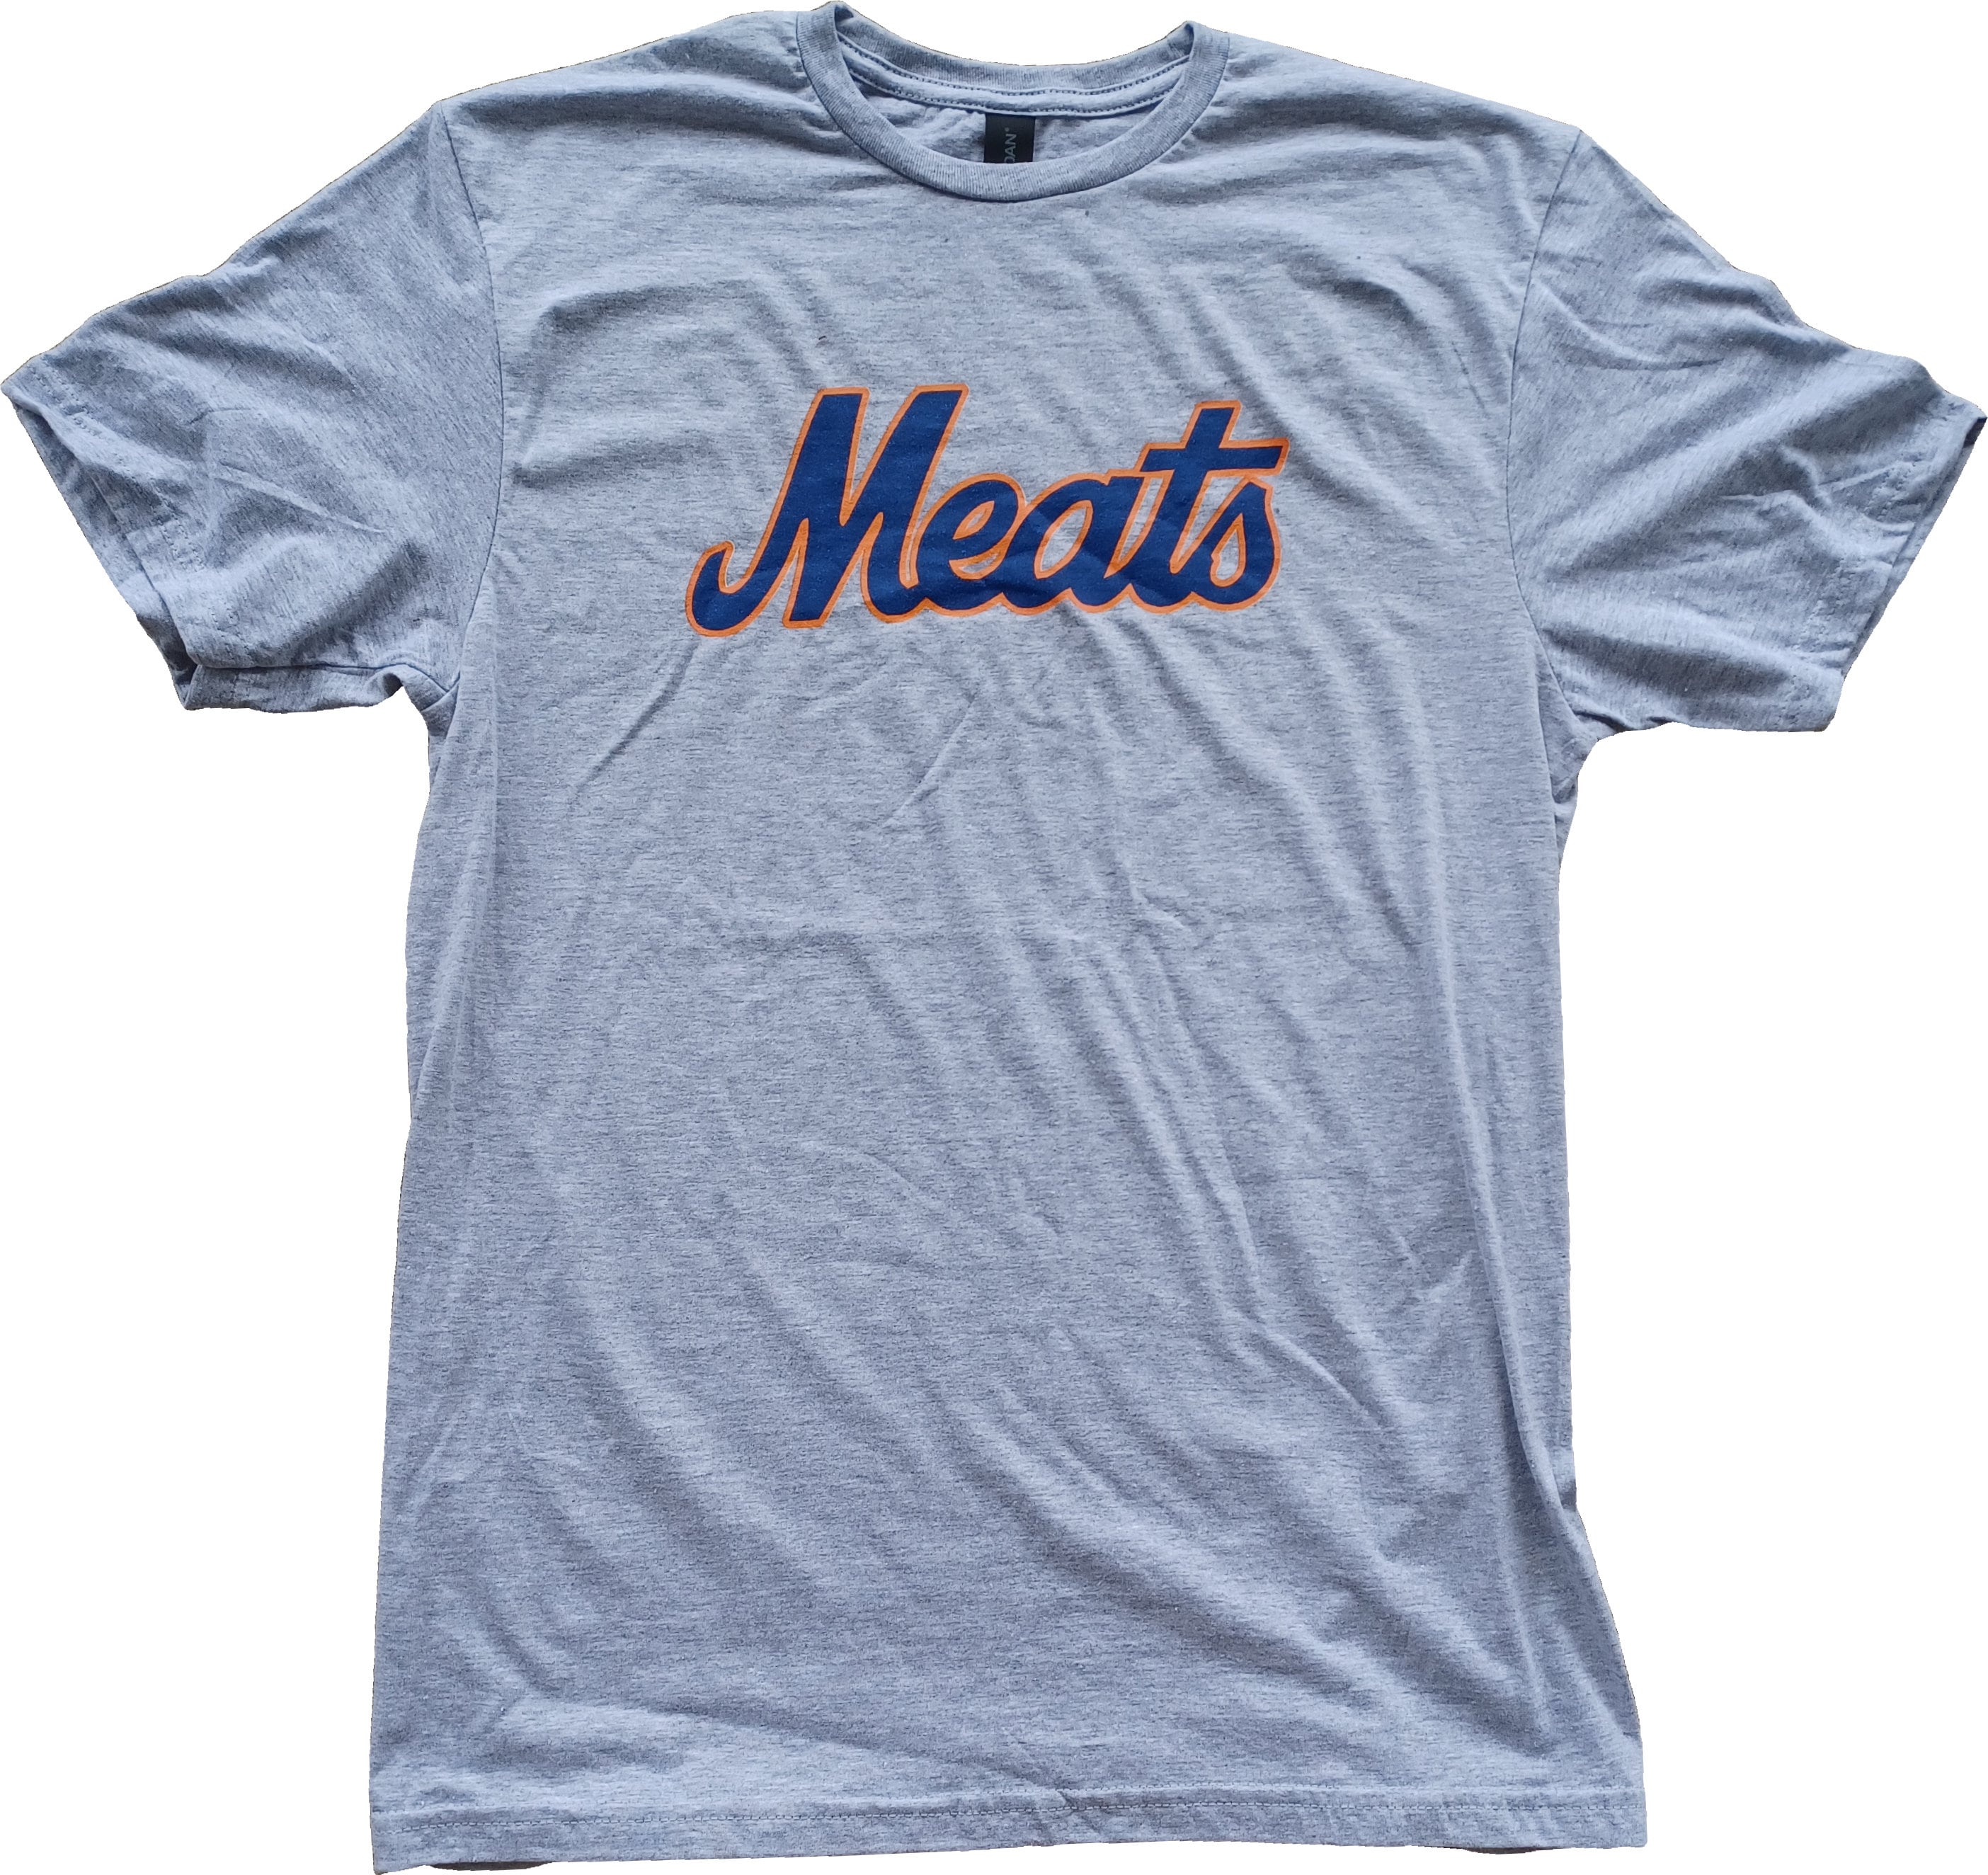 New York Mets Nets Jets MASH UP logo shirt S - 5XL!!!